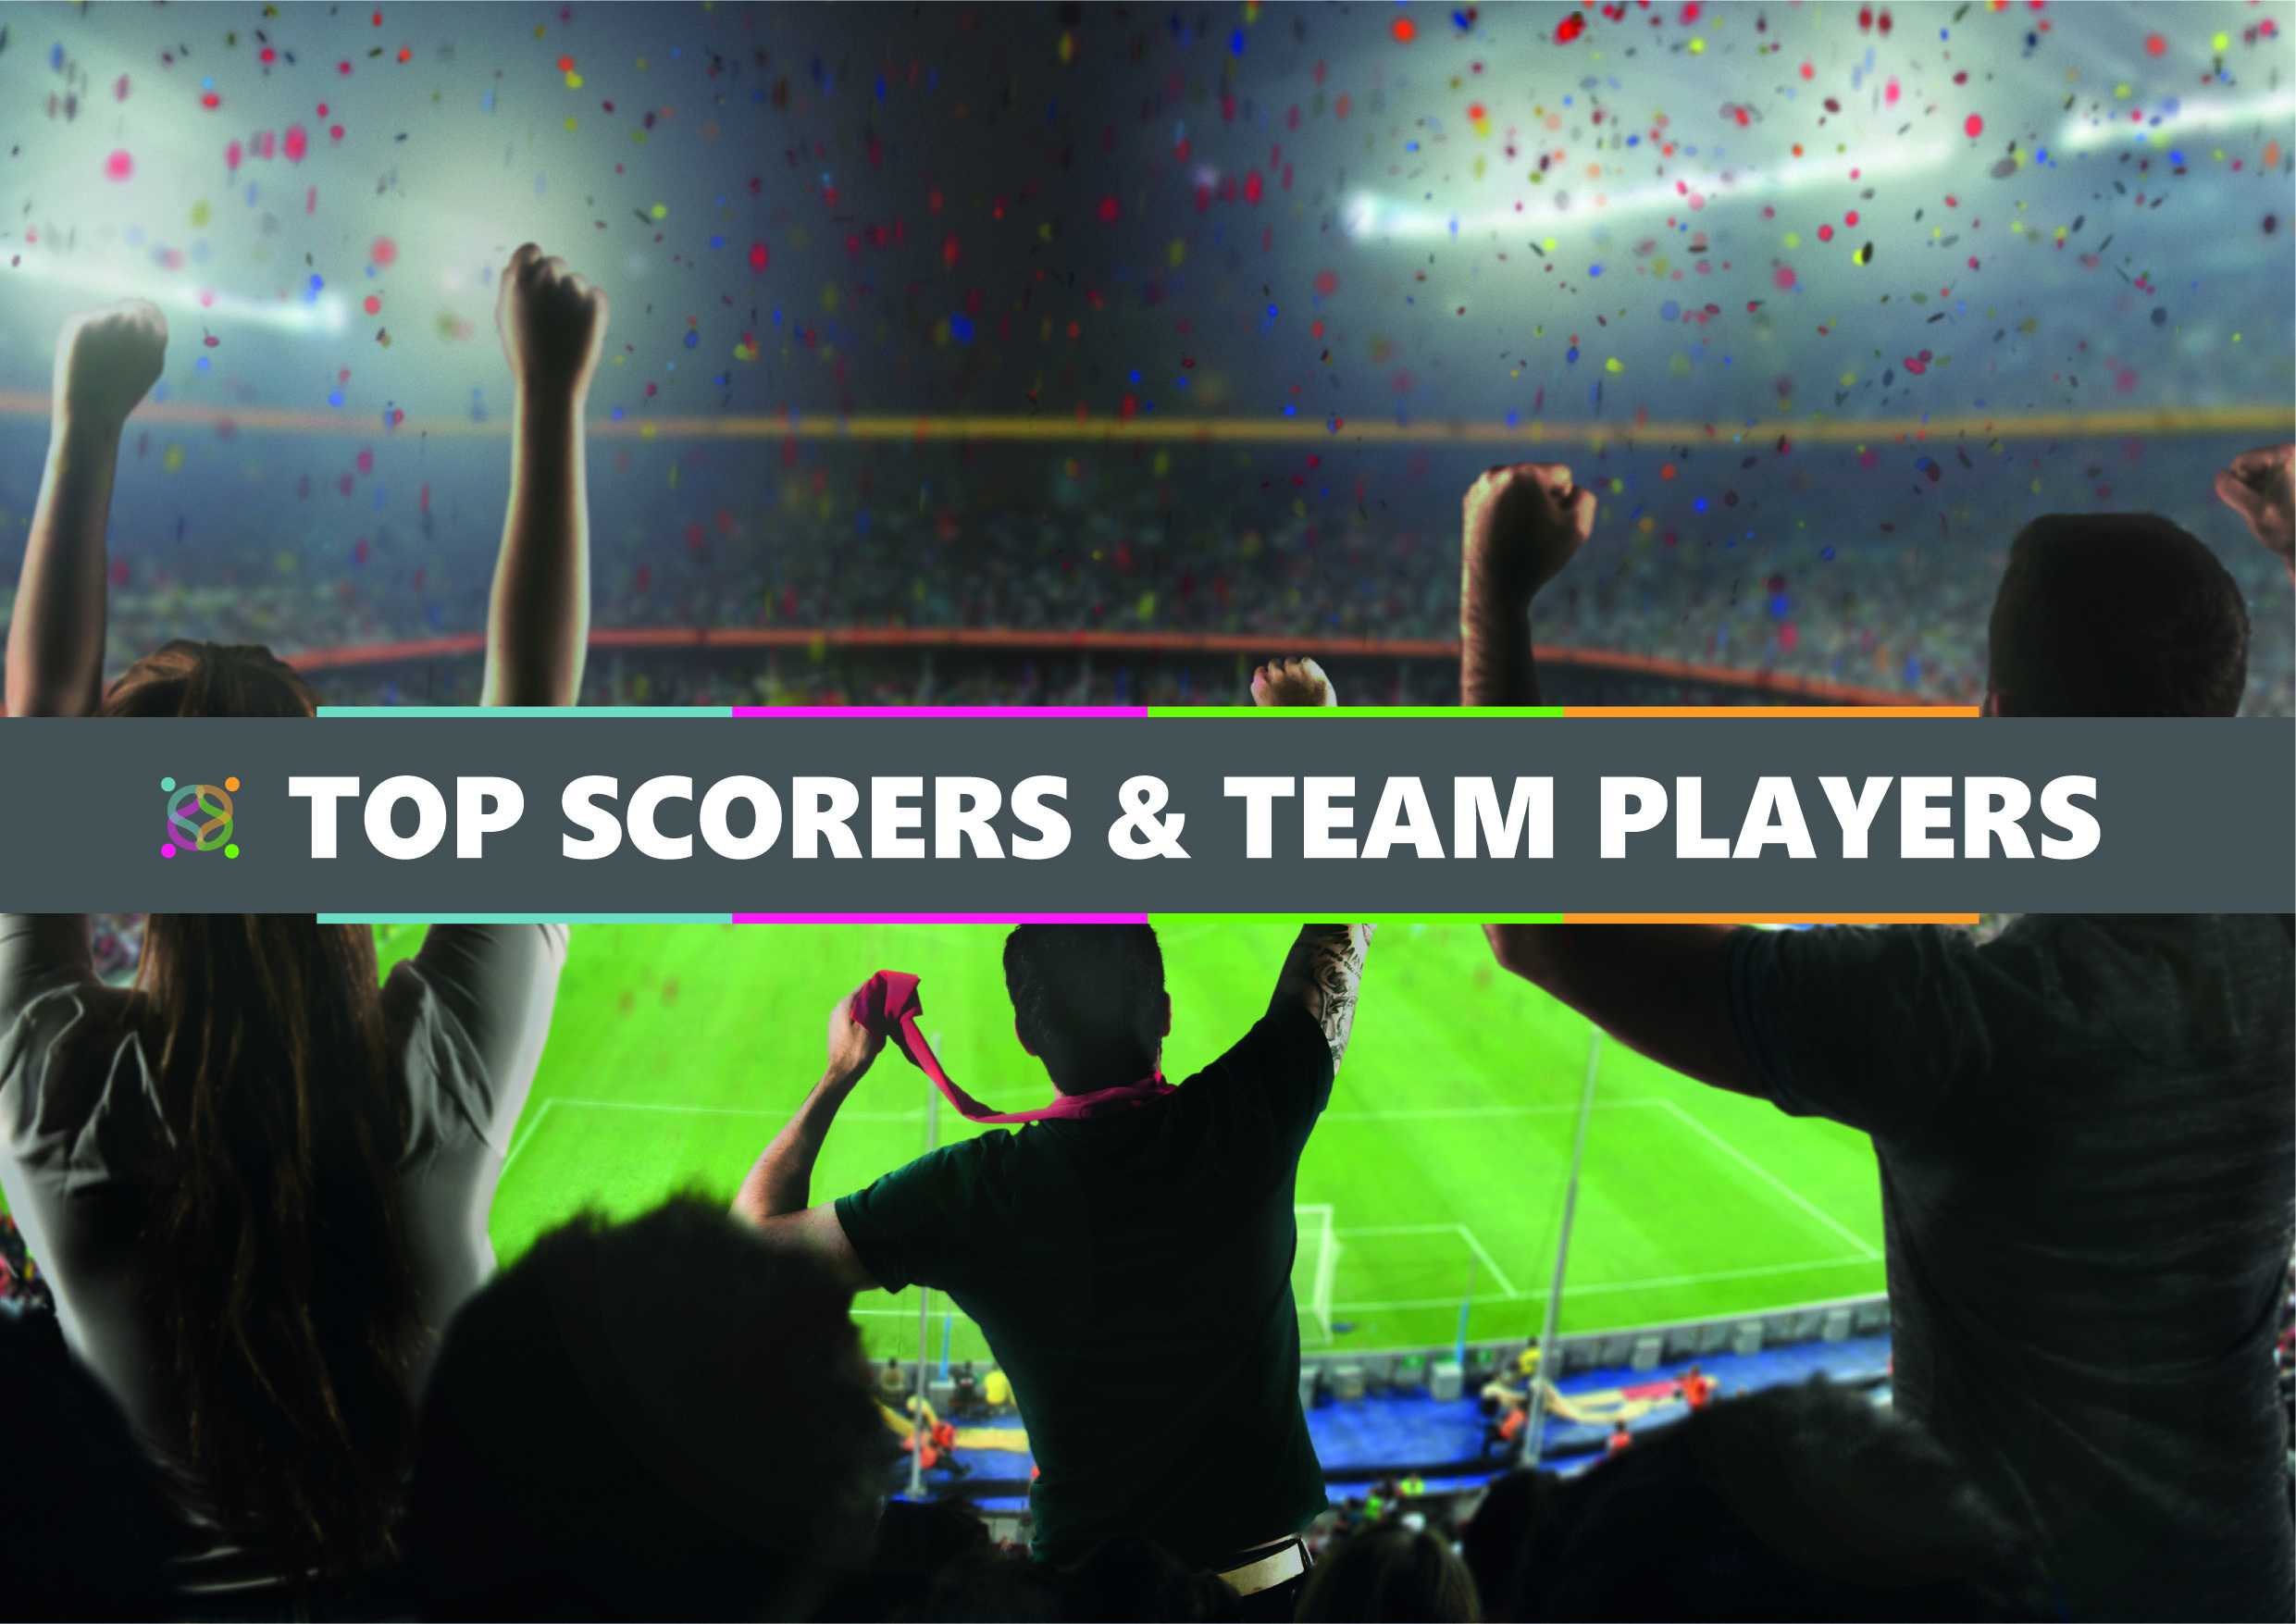 Image Top Scorers & Team Players | TeambuildingGuide